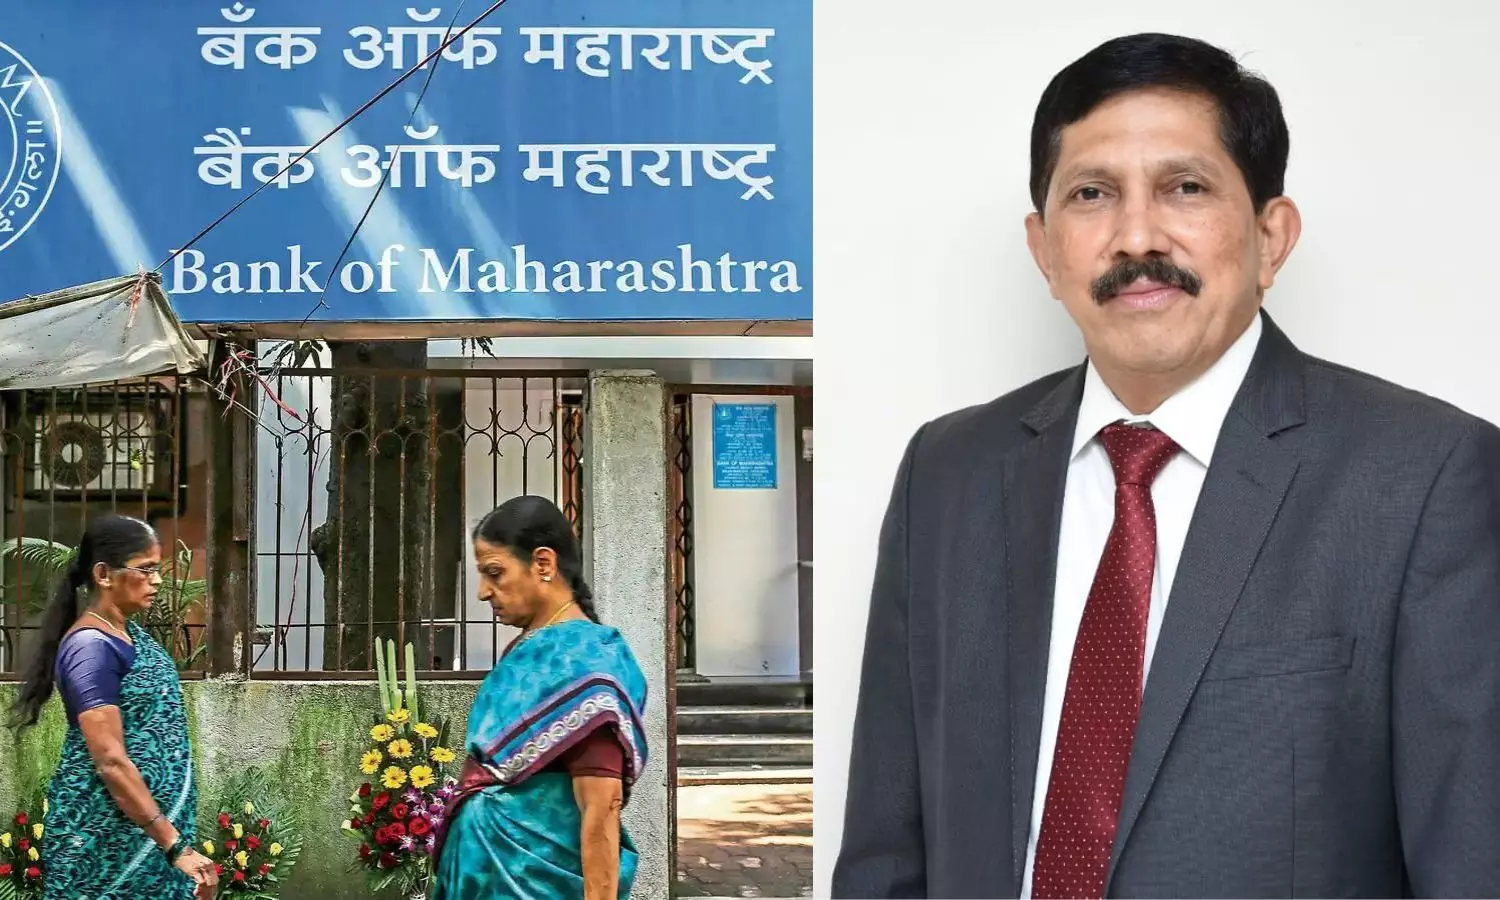 Bank of Maharashtra and MD and CEO AS Rajeev